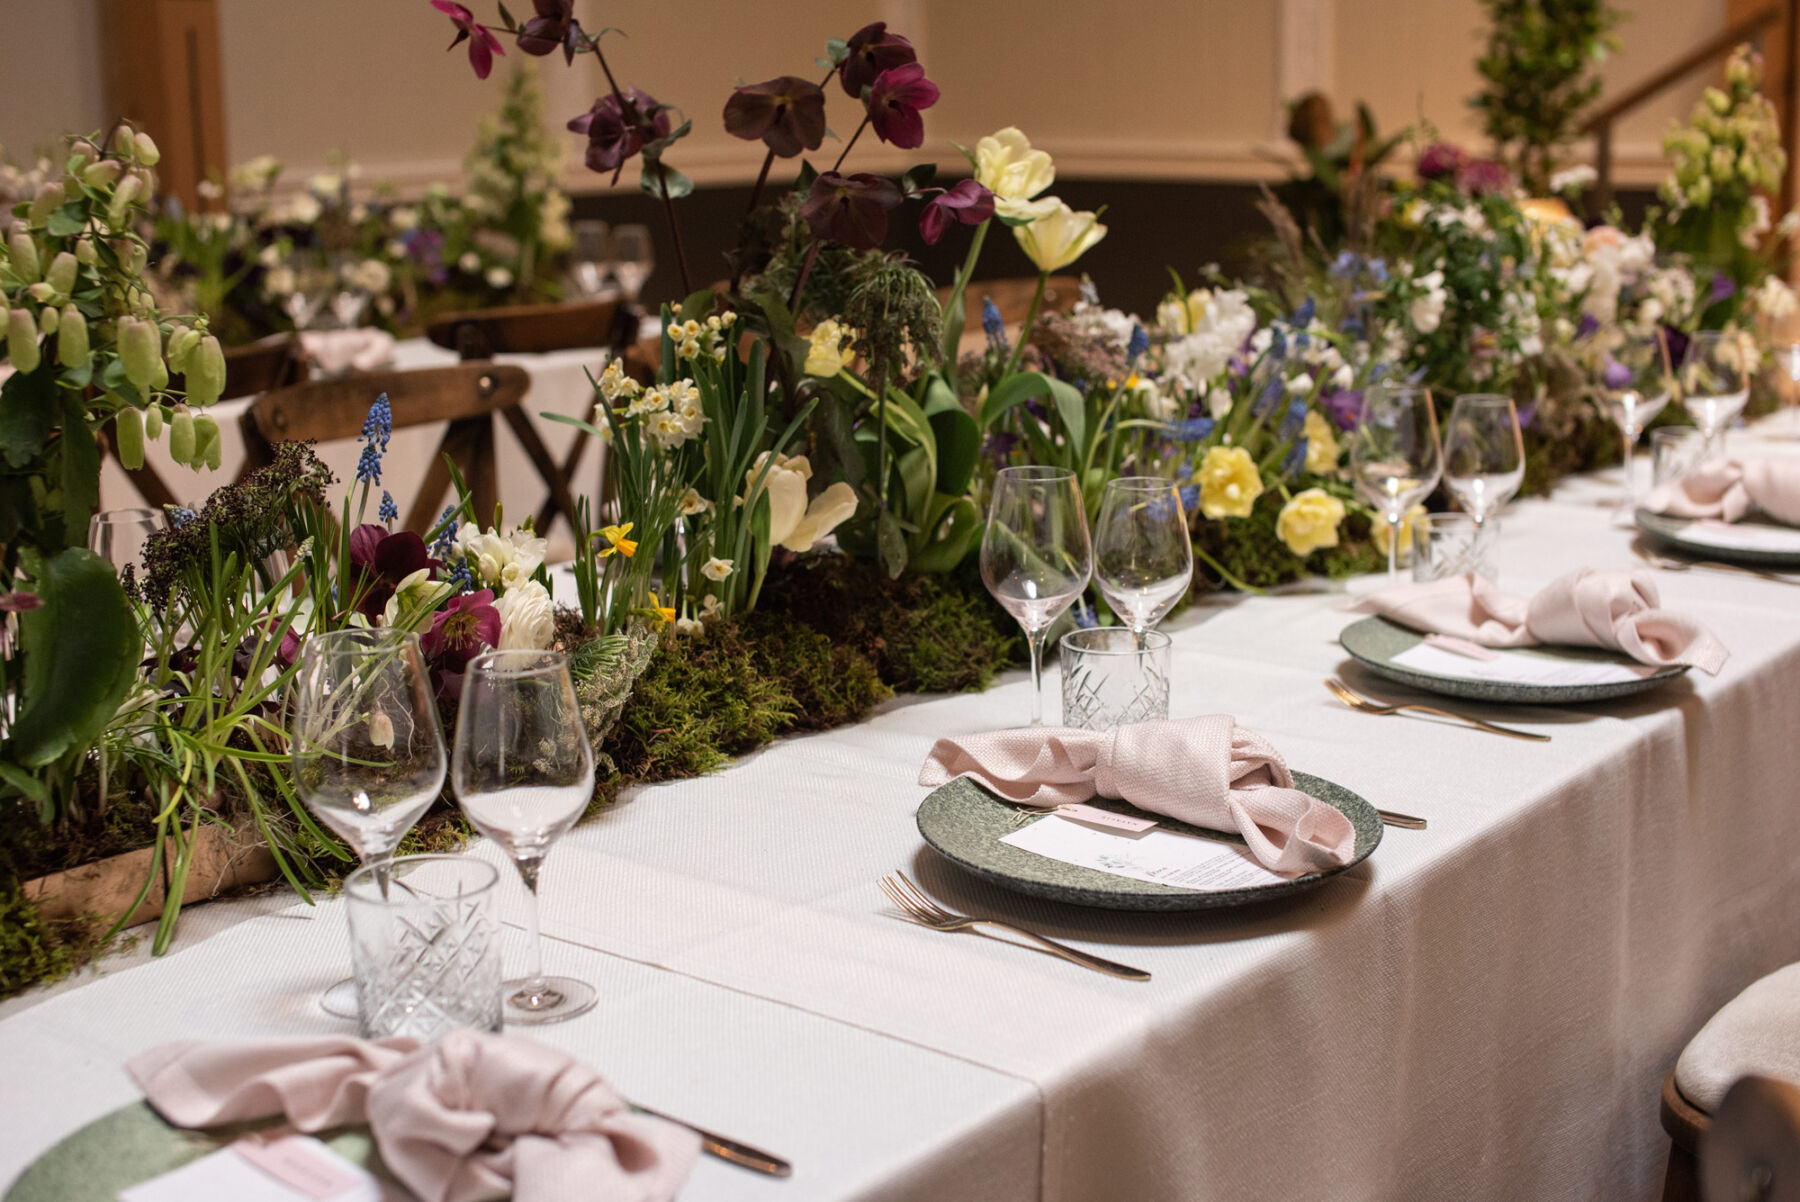 Seasonal Spring wedding flowers by Hayford & Rhodes at RSA House, sustainable London wedding venue